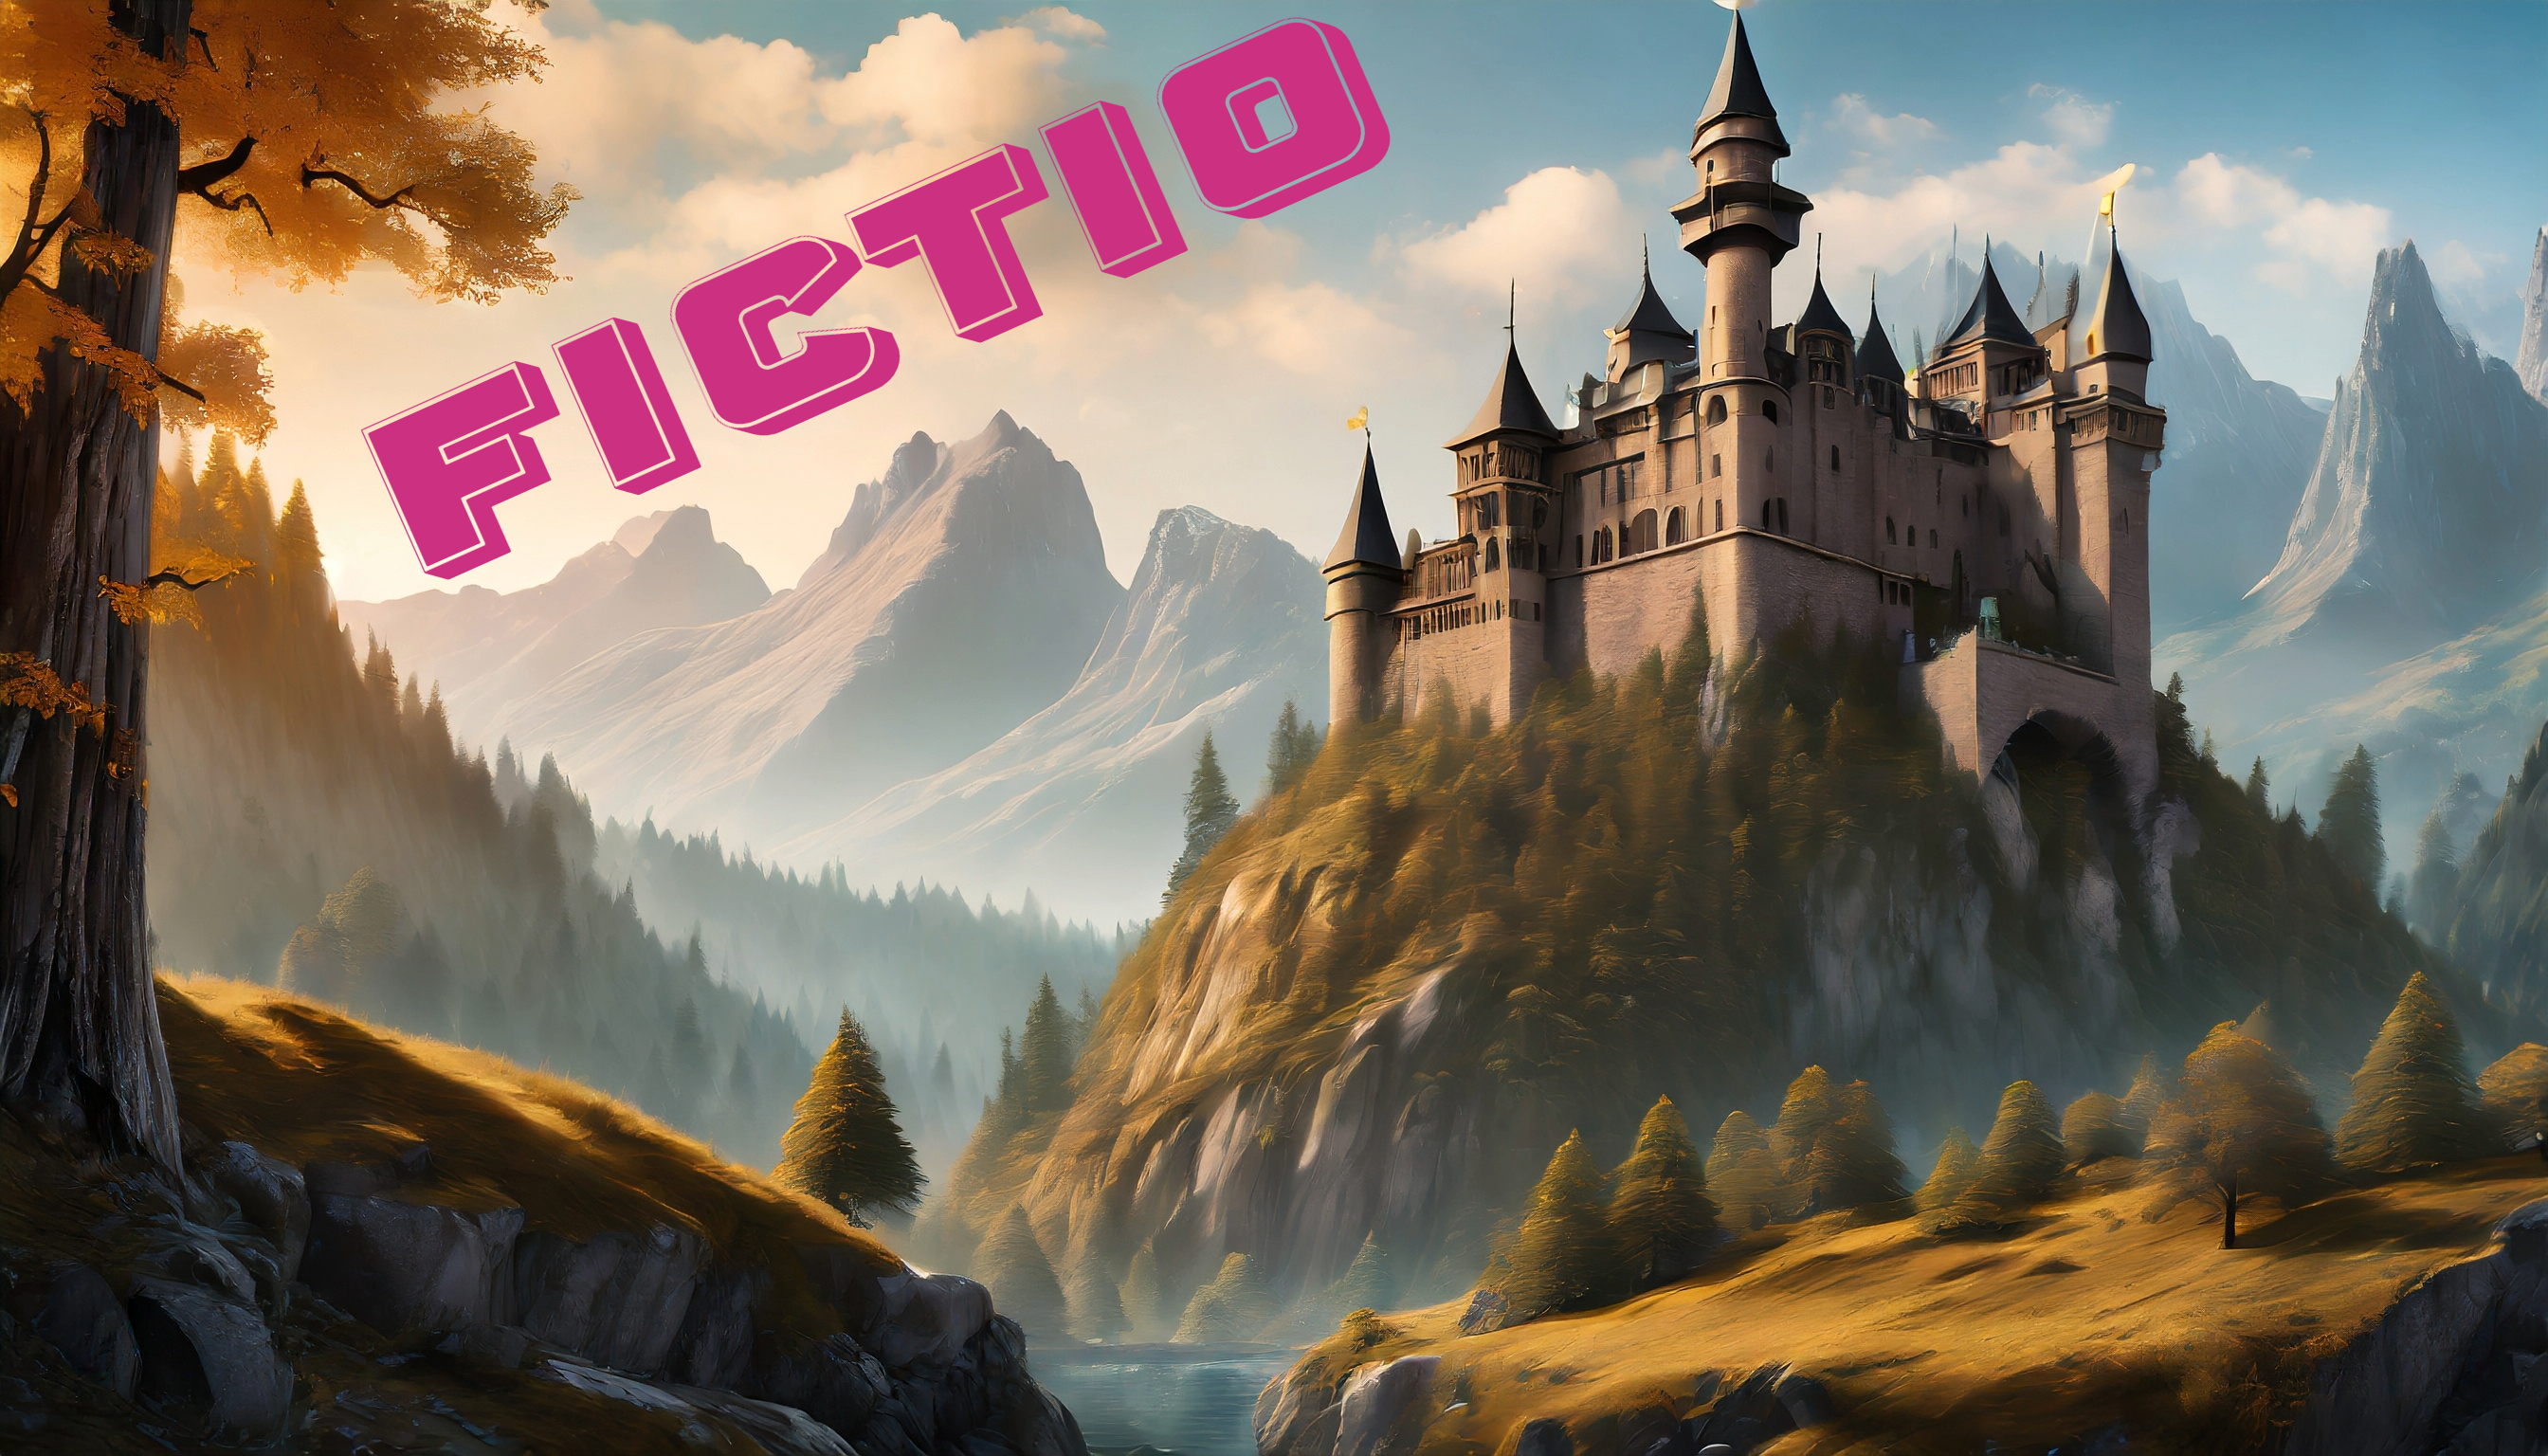 A castle with a random fictional name